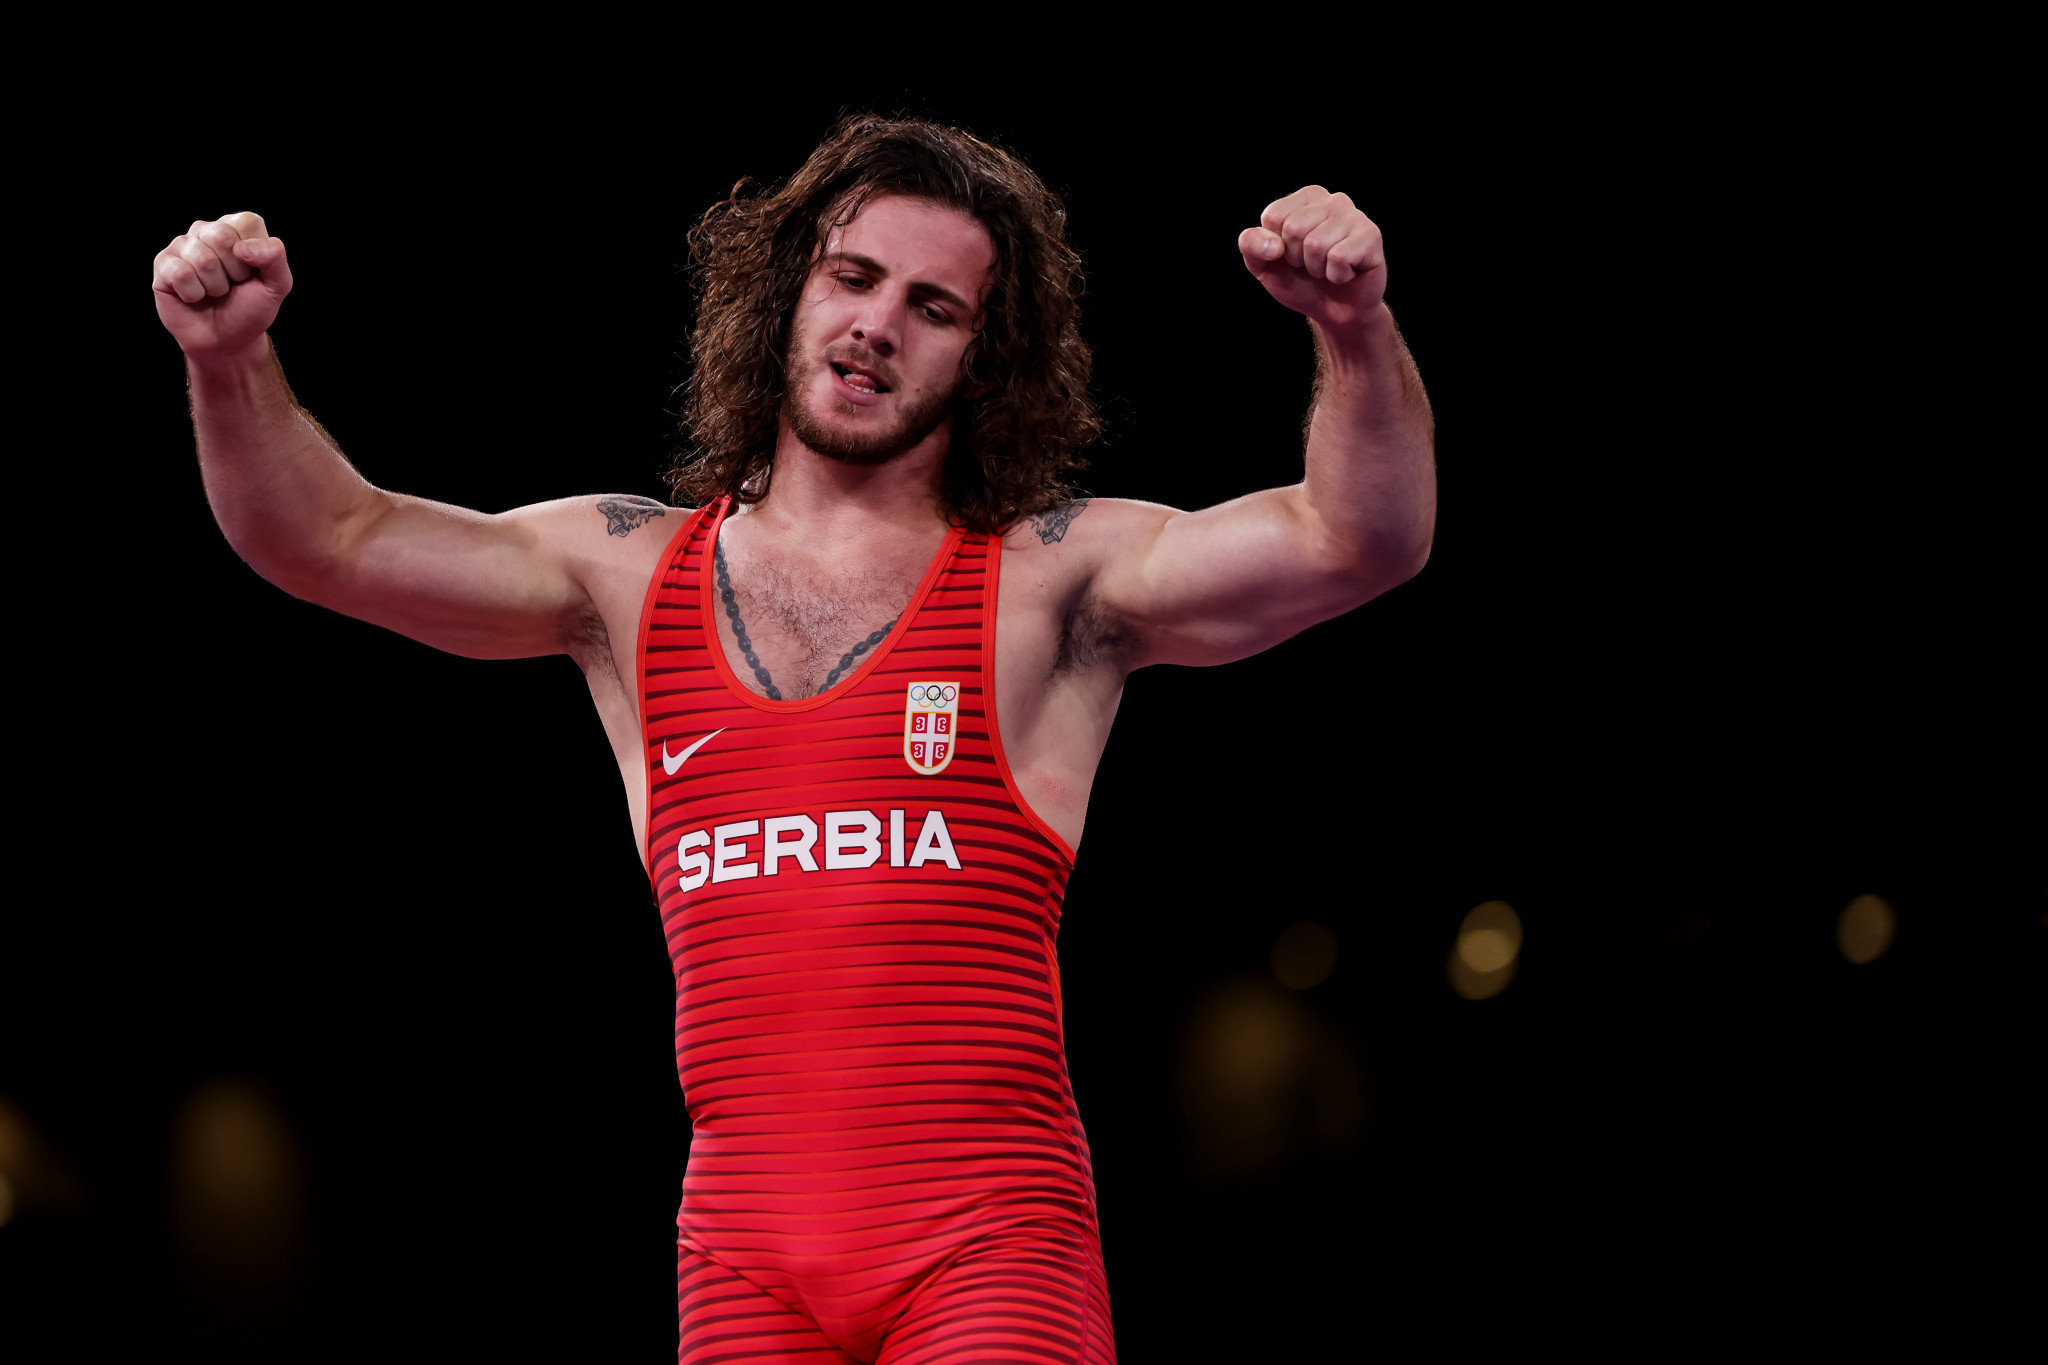 Host athletes shine at World Wrestling Championships in Serbia